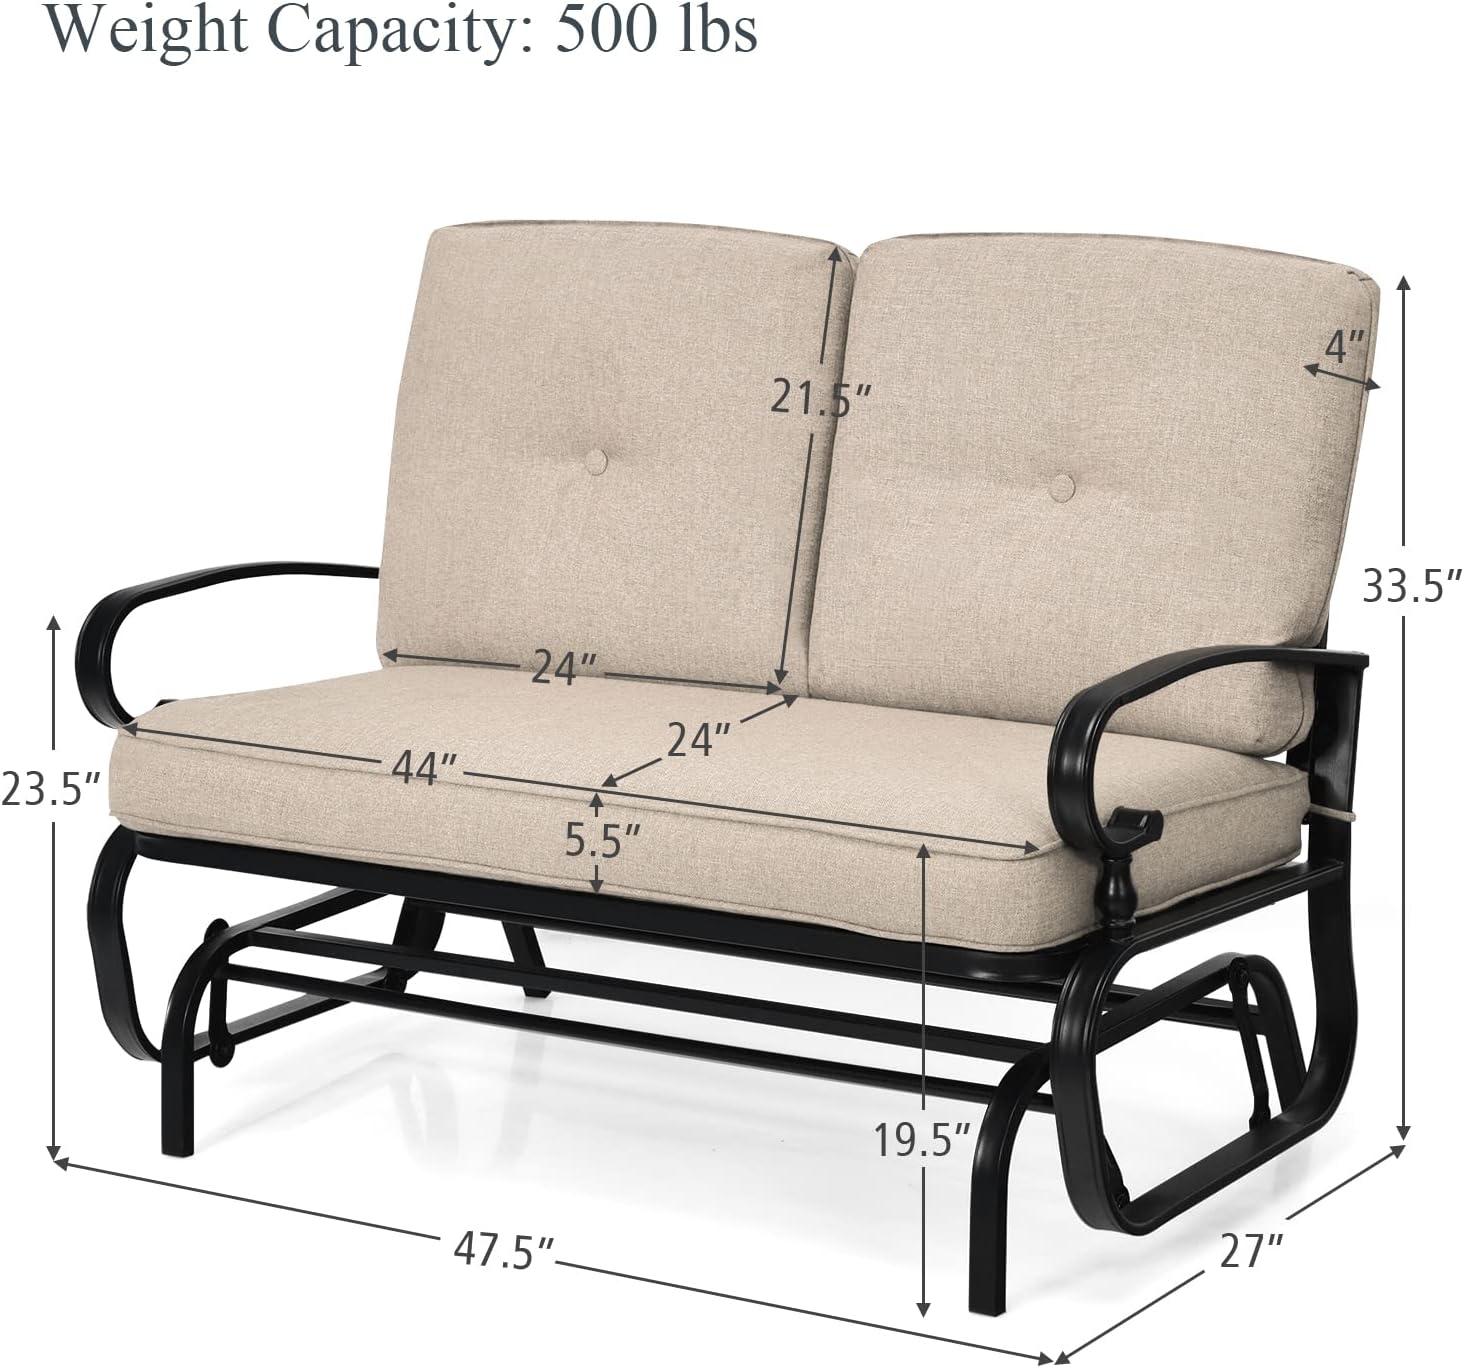 Elegant Black Steel Outdoor Glider Bench with Cushioned Seat, Beige